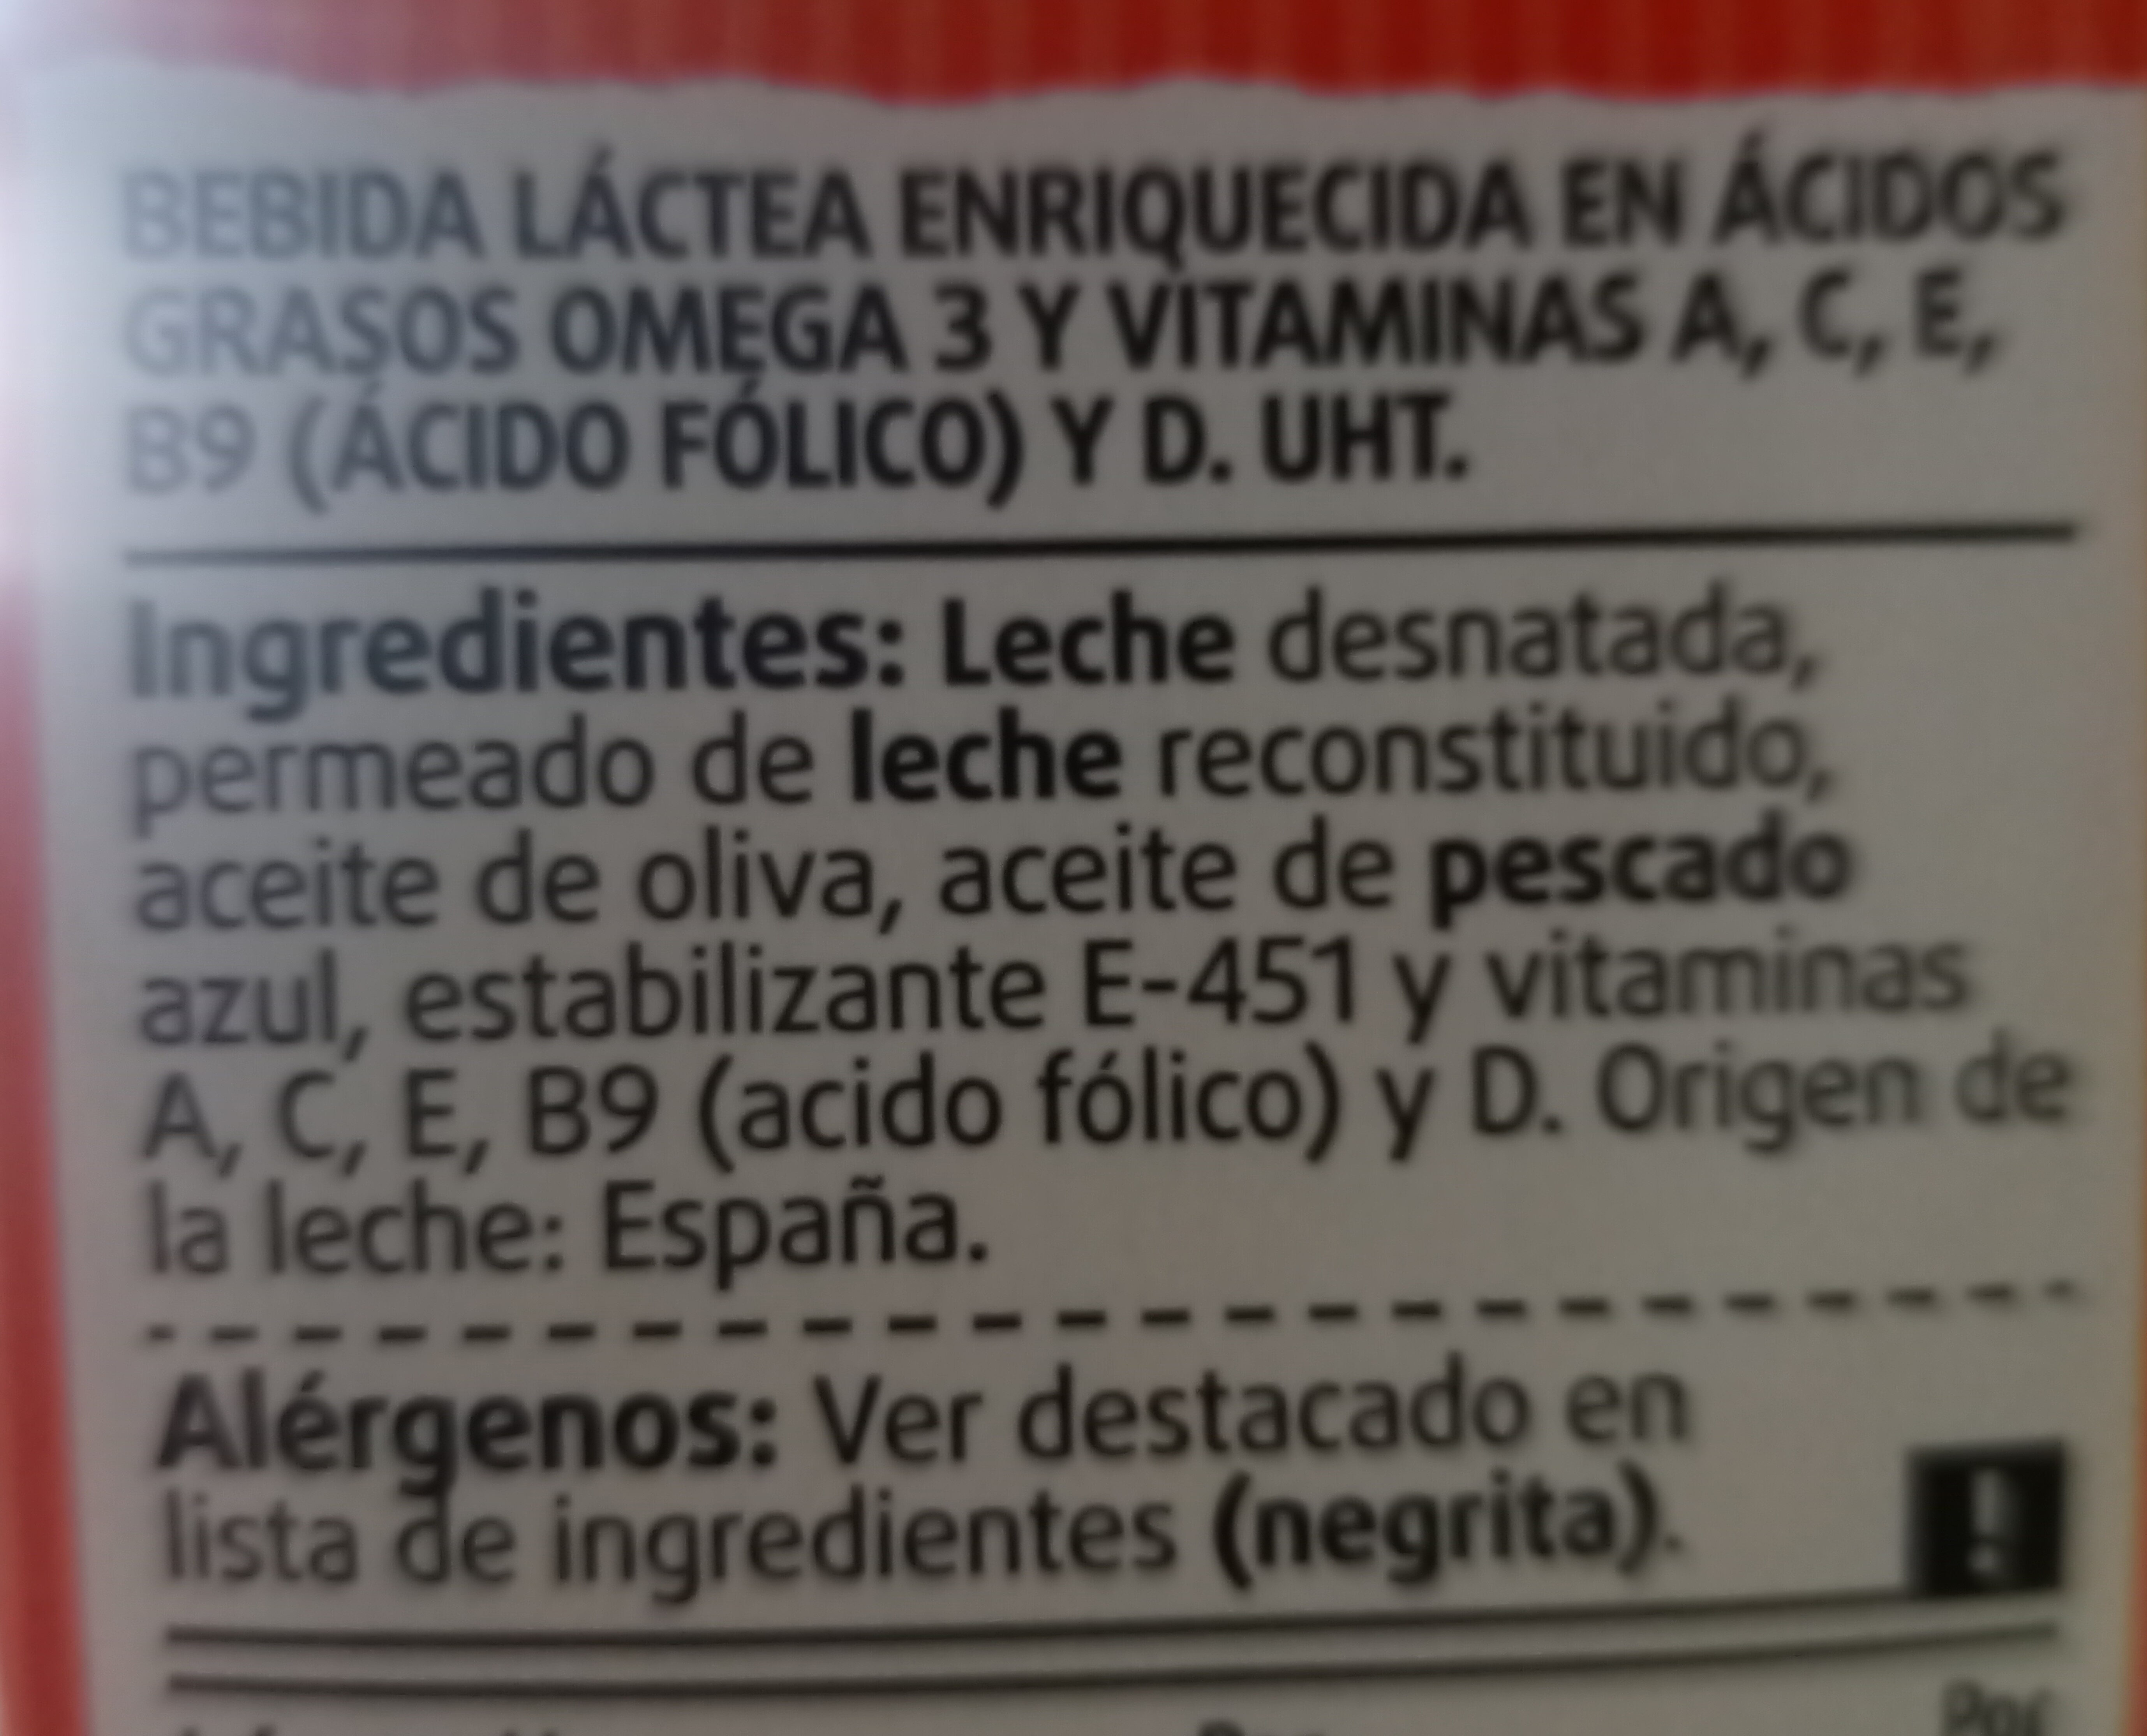 Omega 3 bebida lactea - Ingredientes